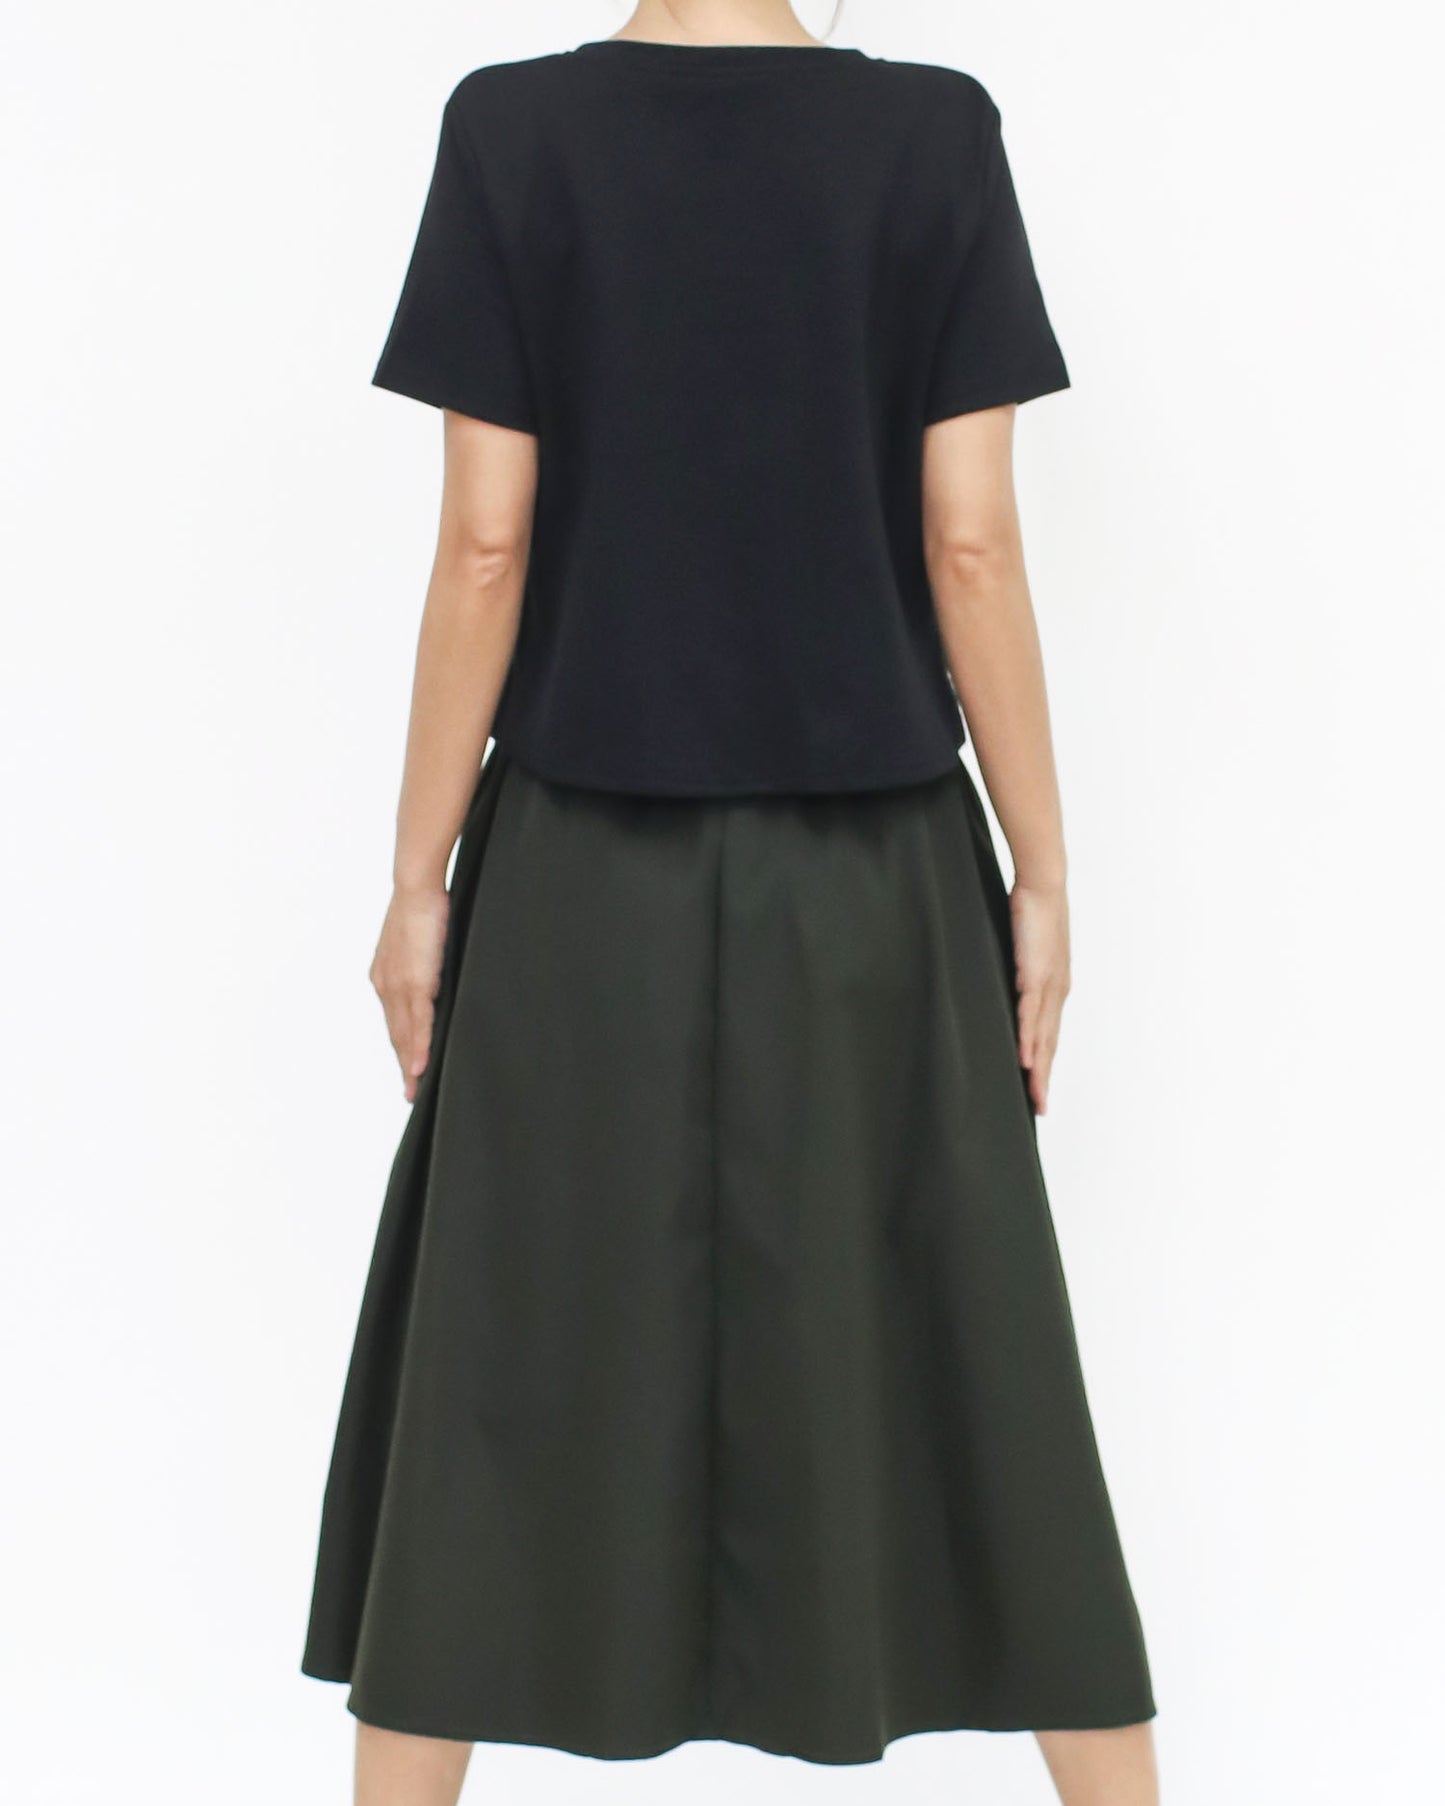 black tee w/ green & denim contrast dress